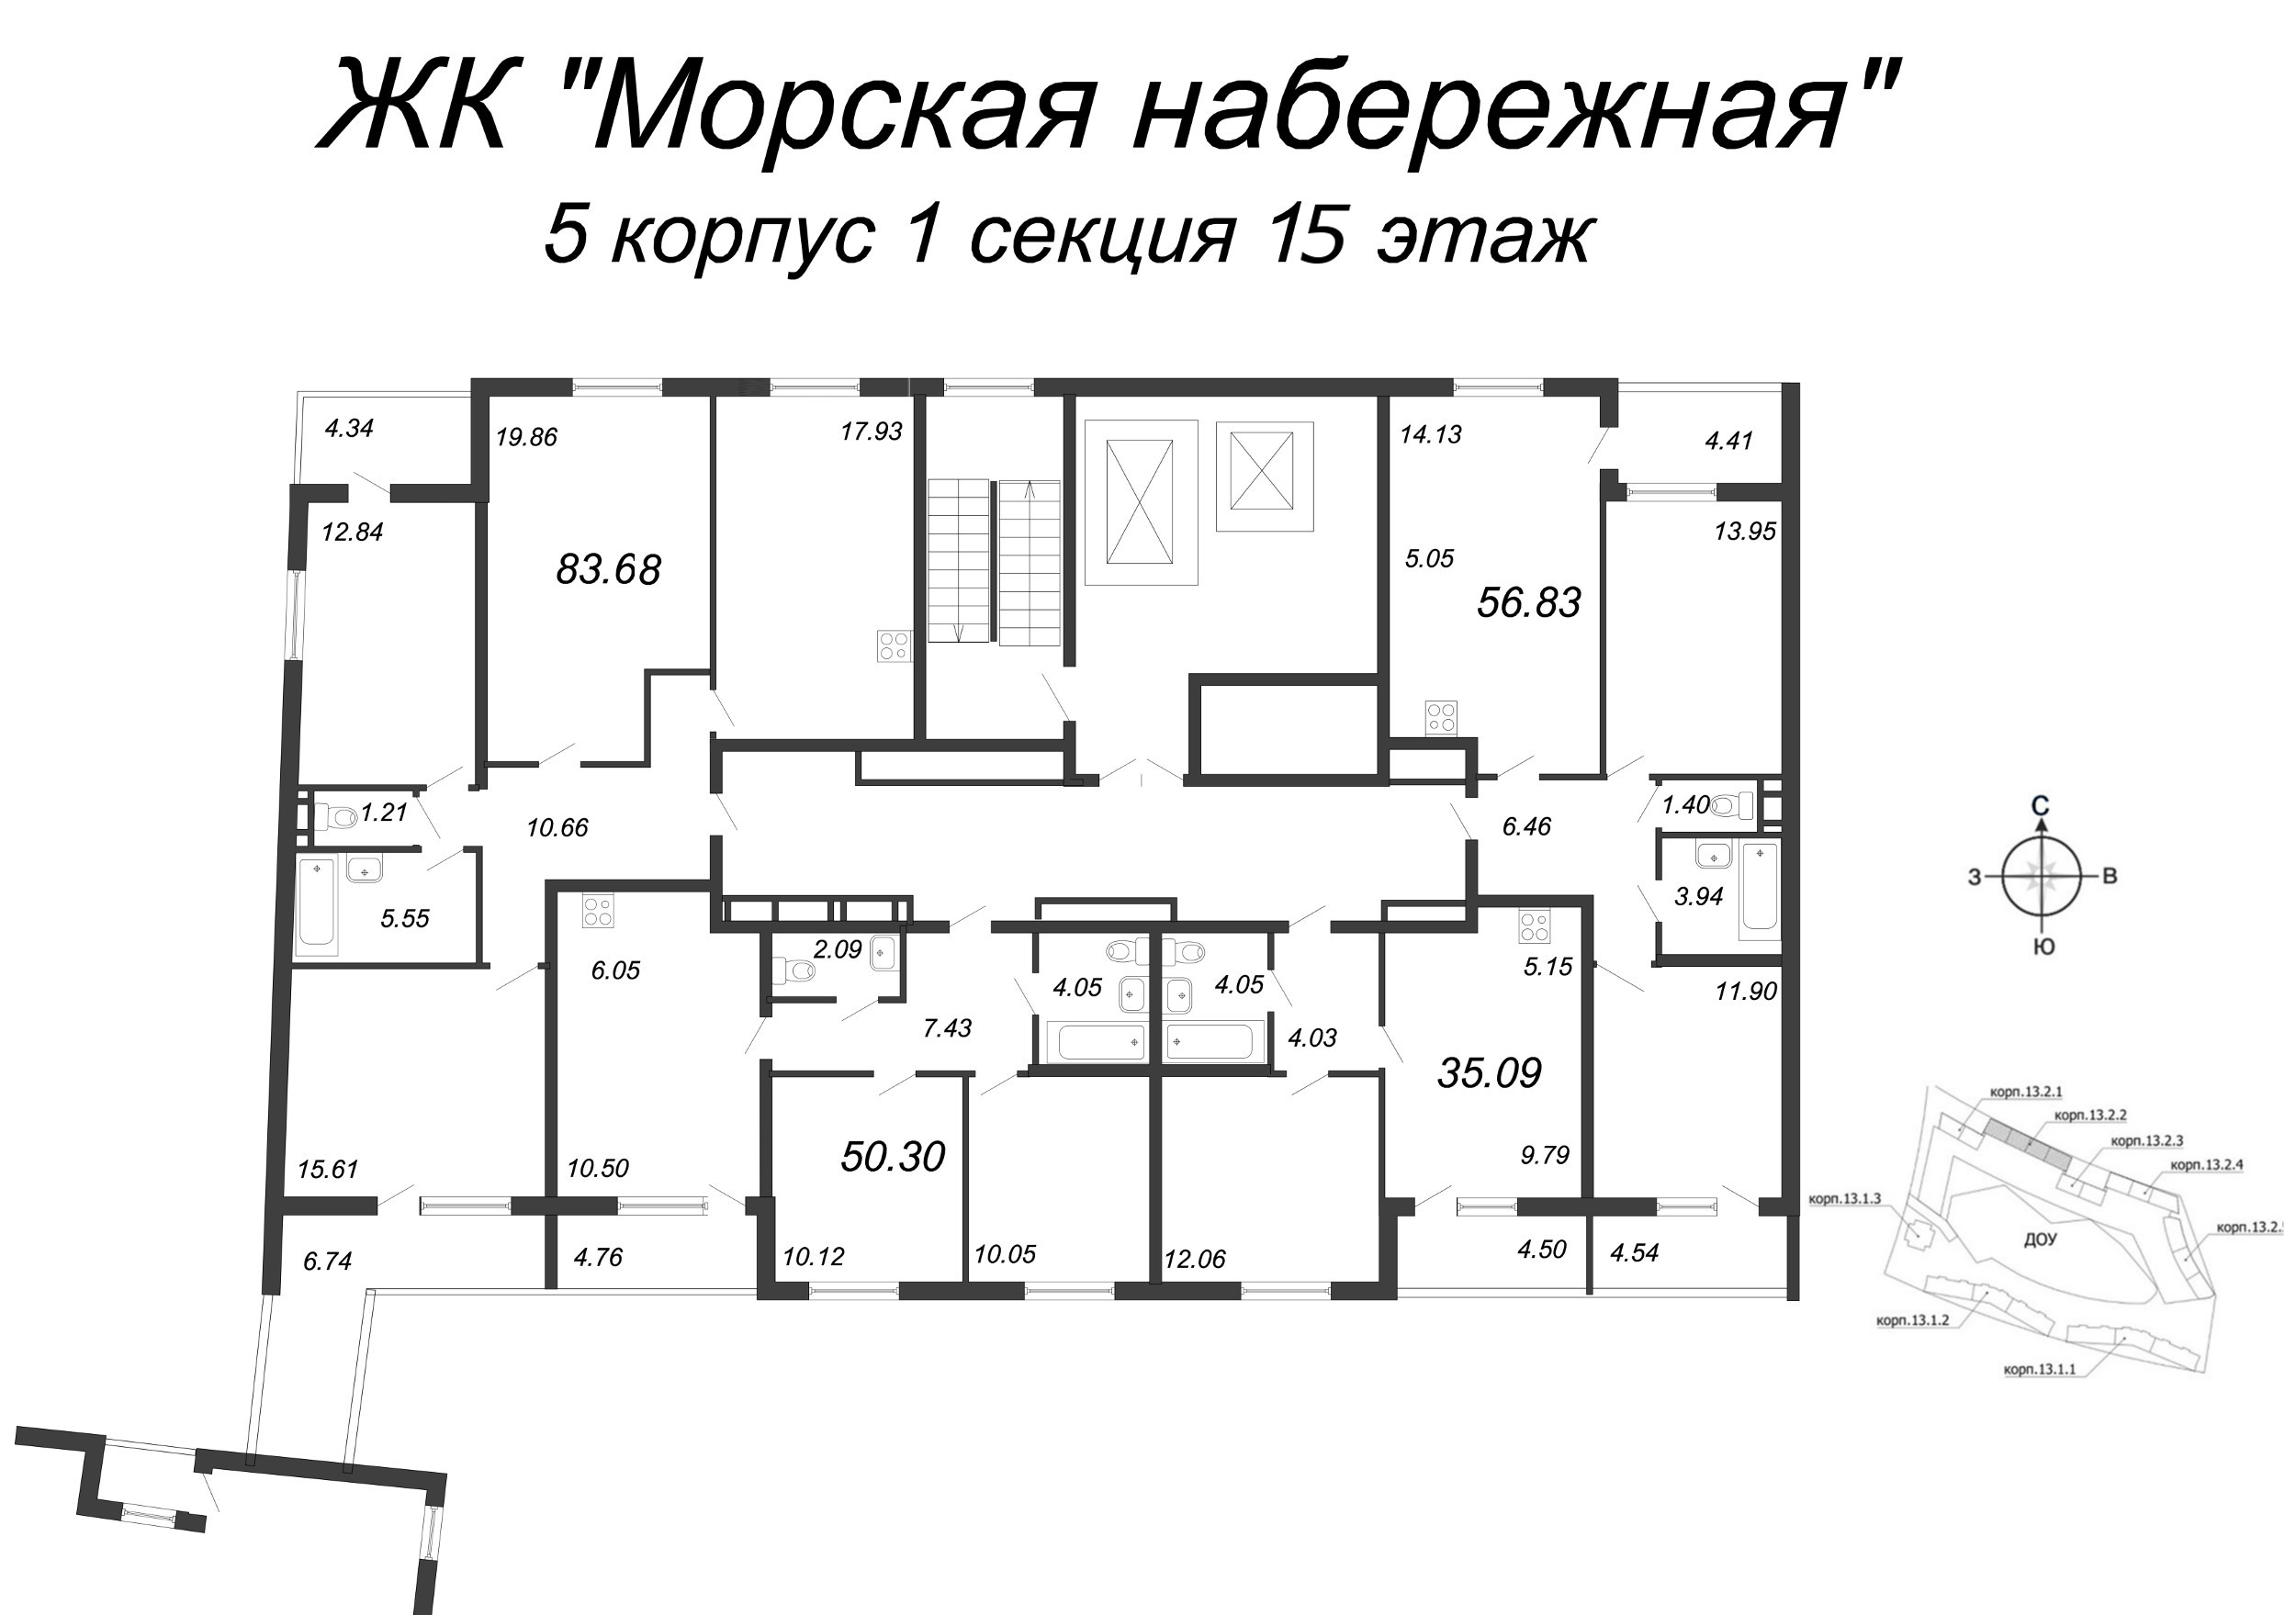 4-комнатная (Евро) квартира, 91 м² - планировка этажа